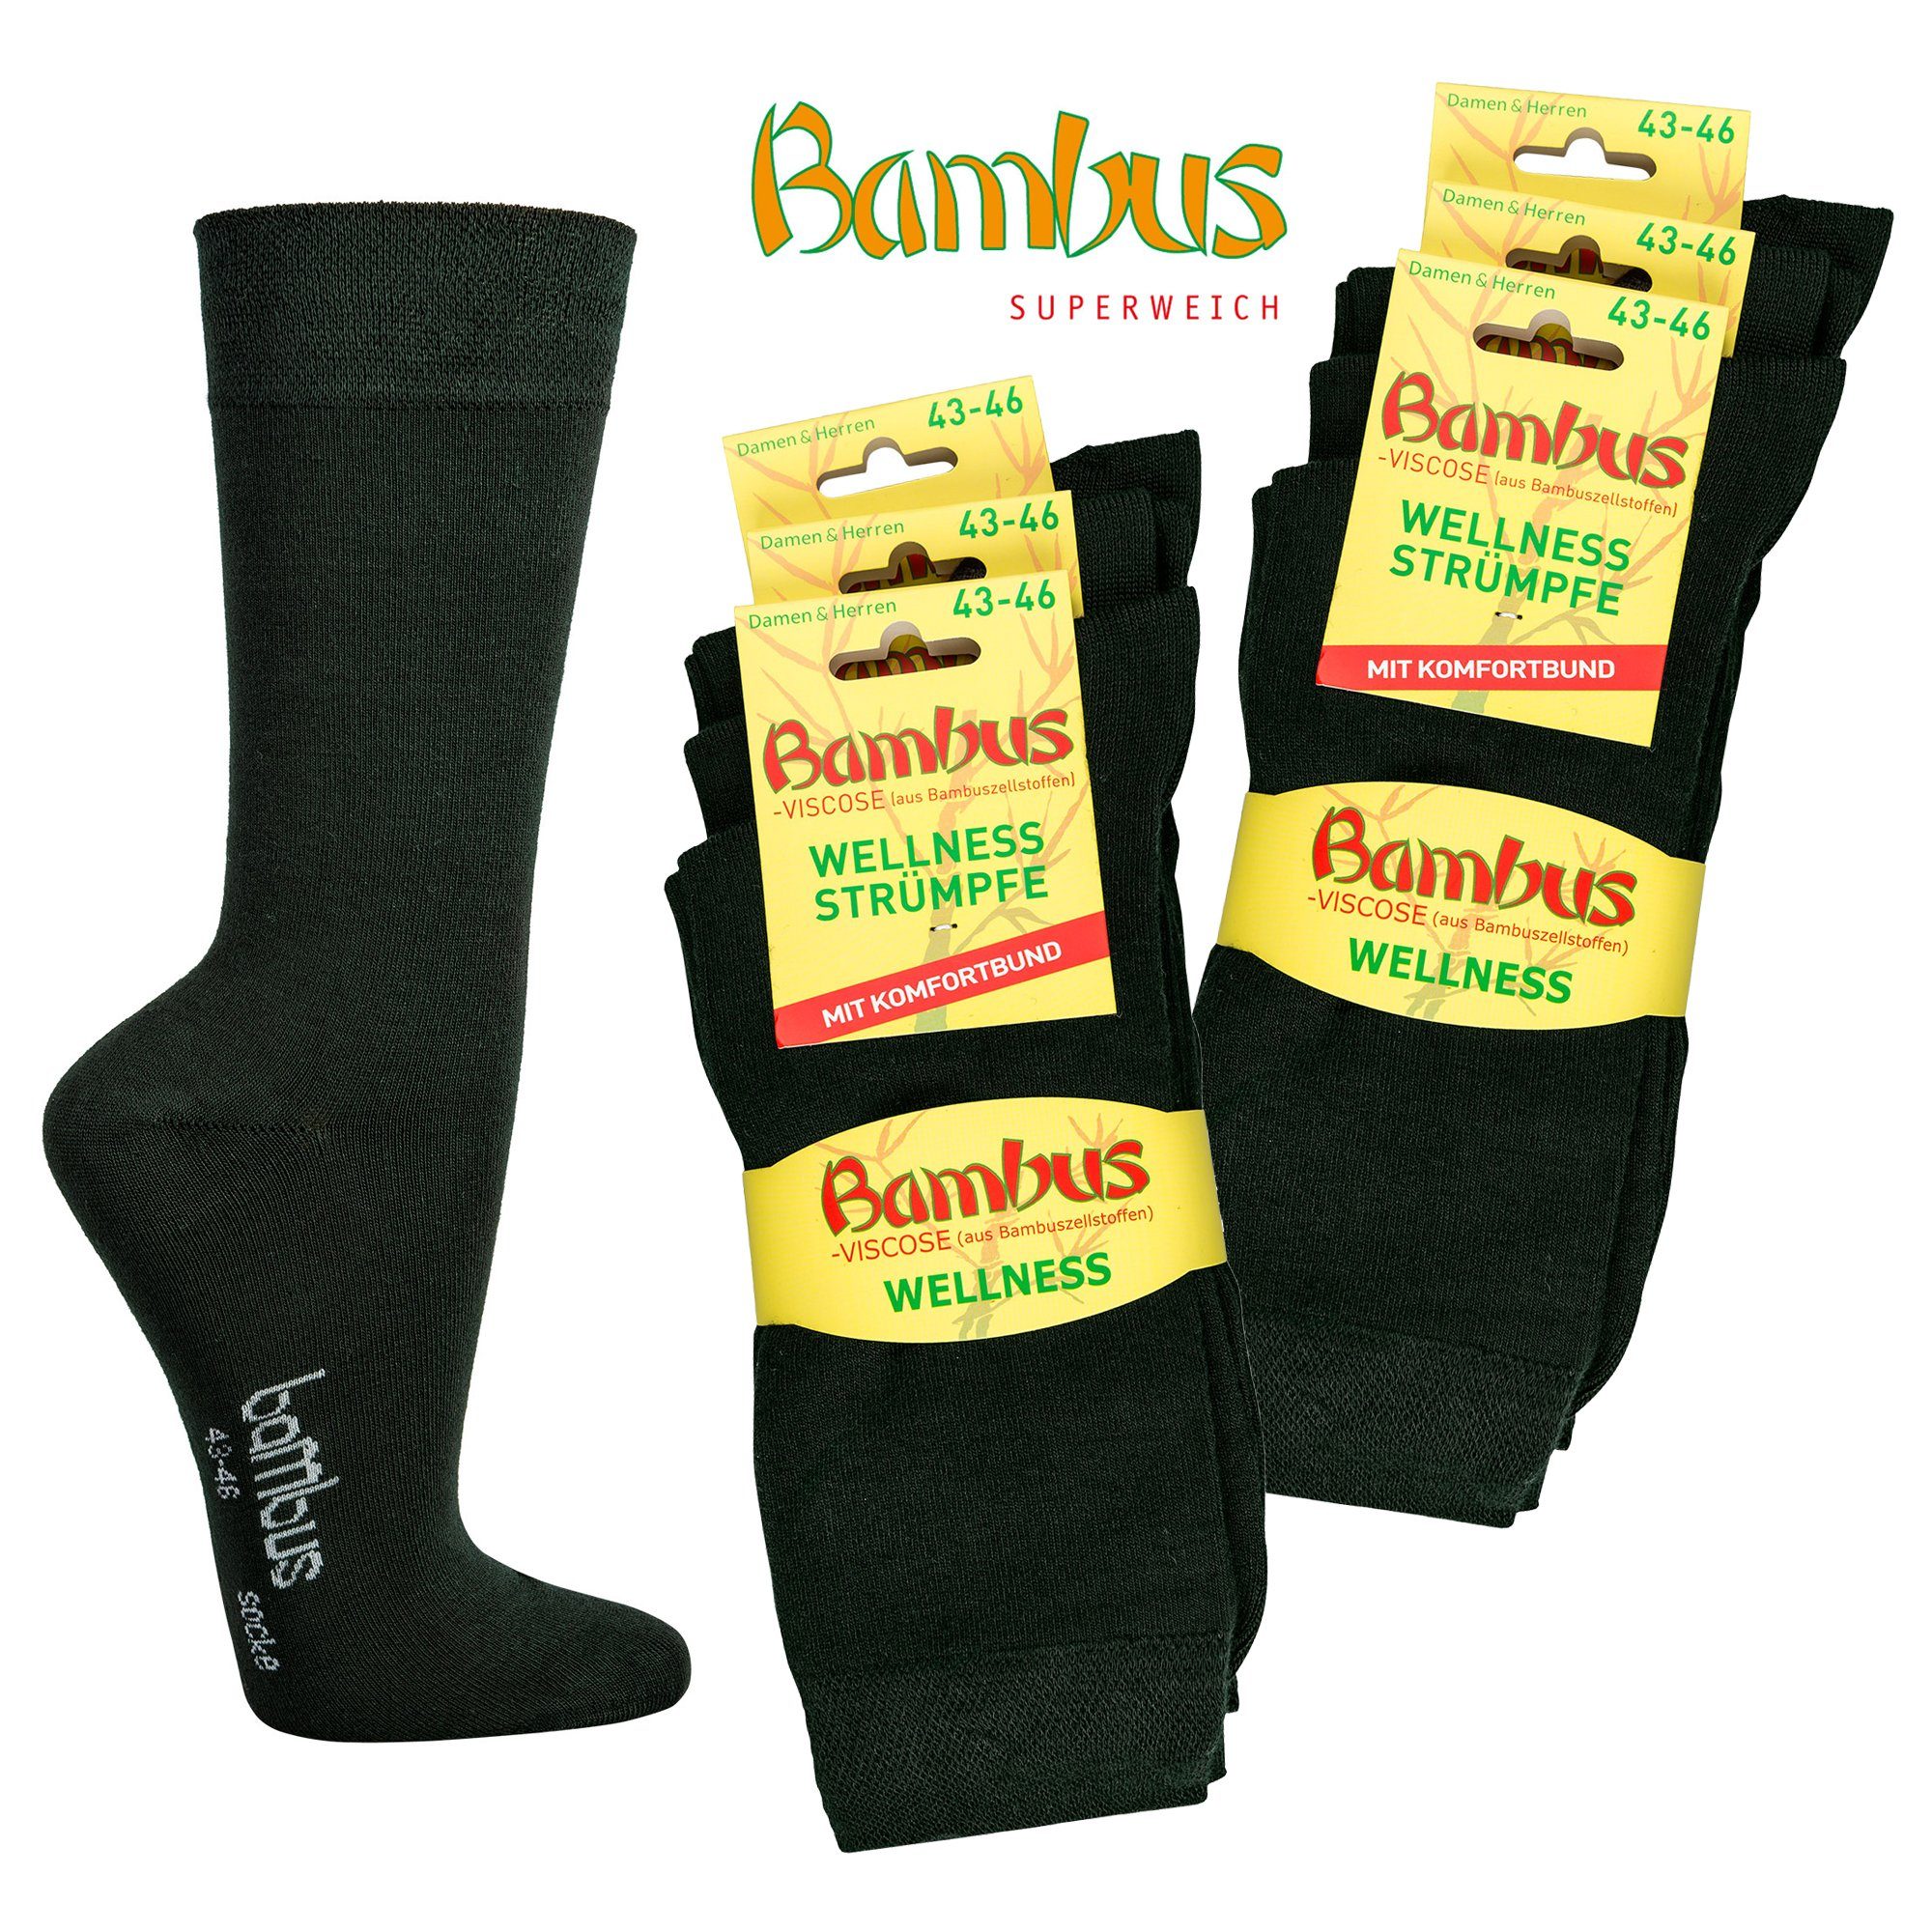 Socks 4 Fun Langsocken 2170 (Packung, 6-Paar, 6 Paar) unifarbene Wellness-Socken, Herren oder Damen Socken, mit Komfortbund anthrazit